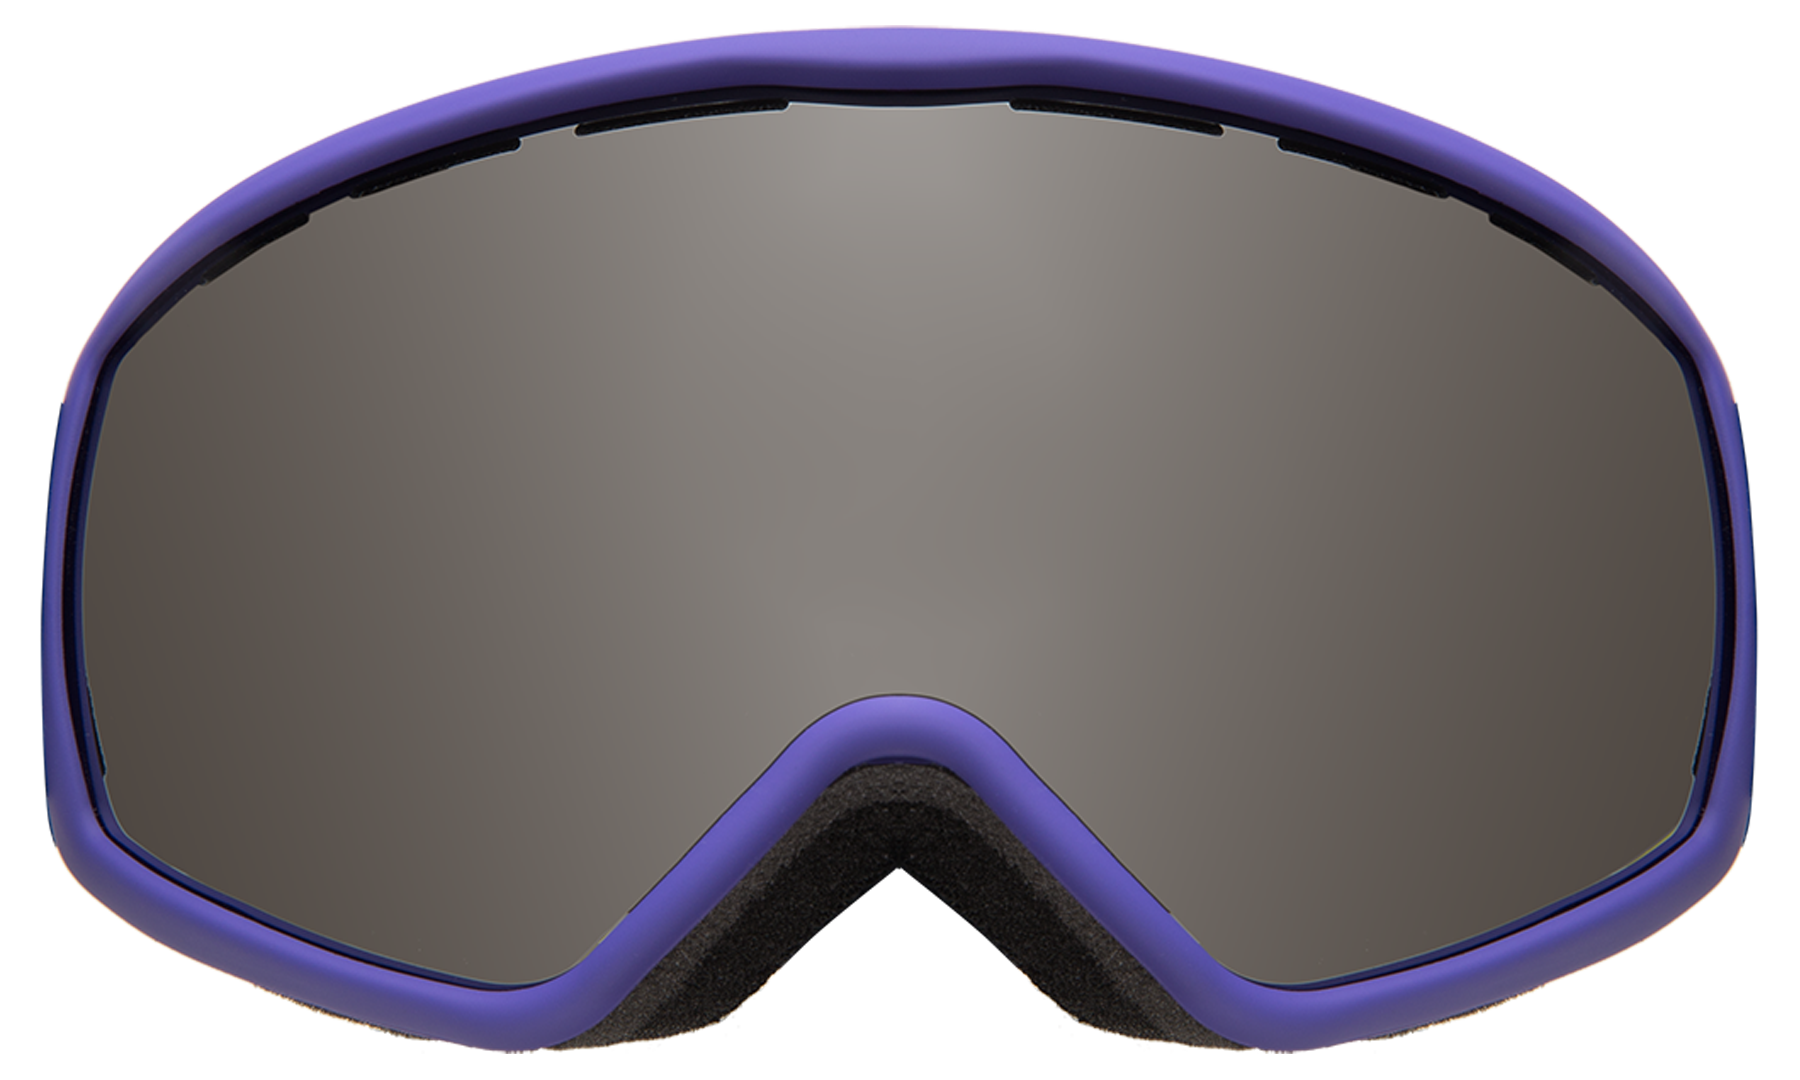 Feelin NXT® - Snowboard/Ski Goggles for Women